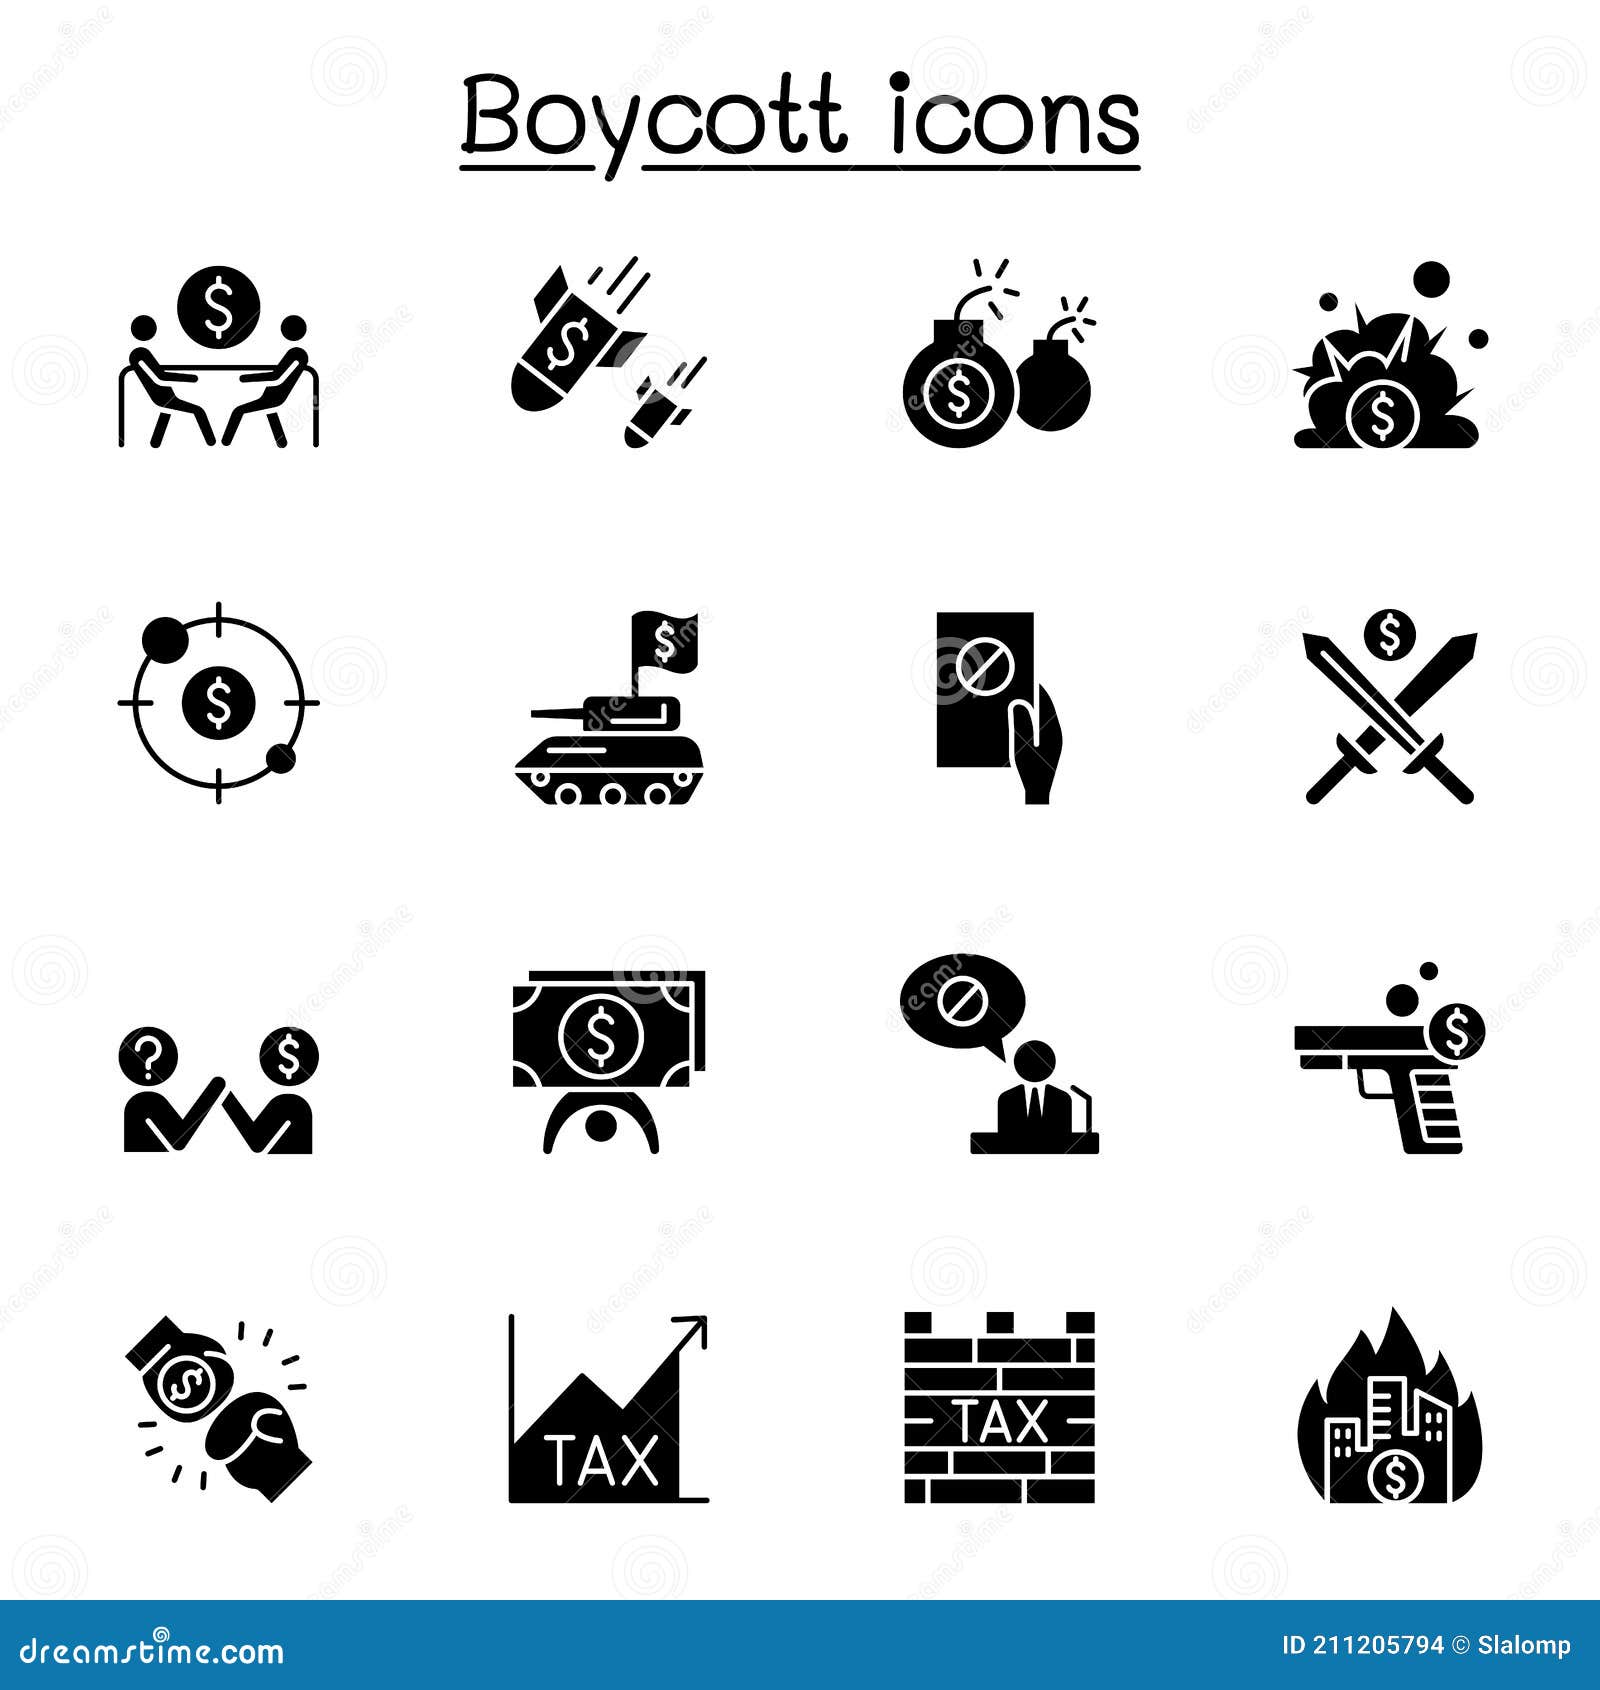 boycott, business war, trade war icon set   graphic 